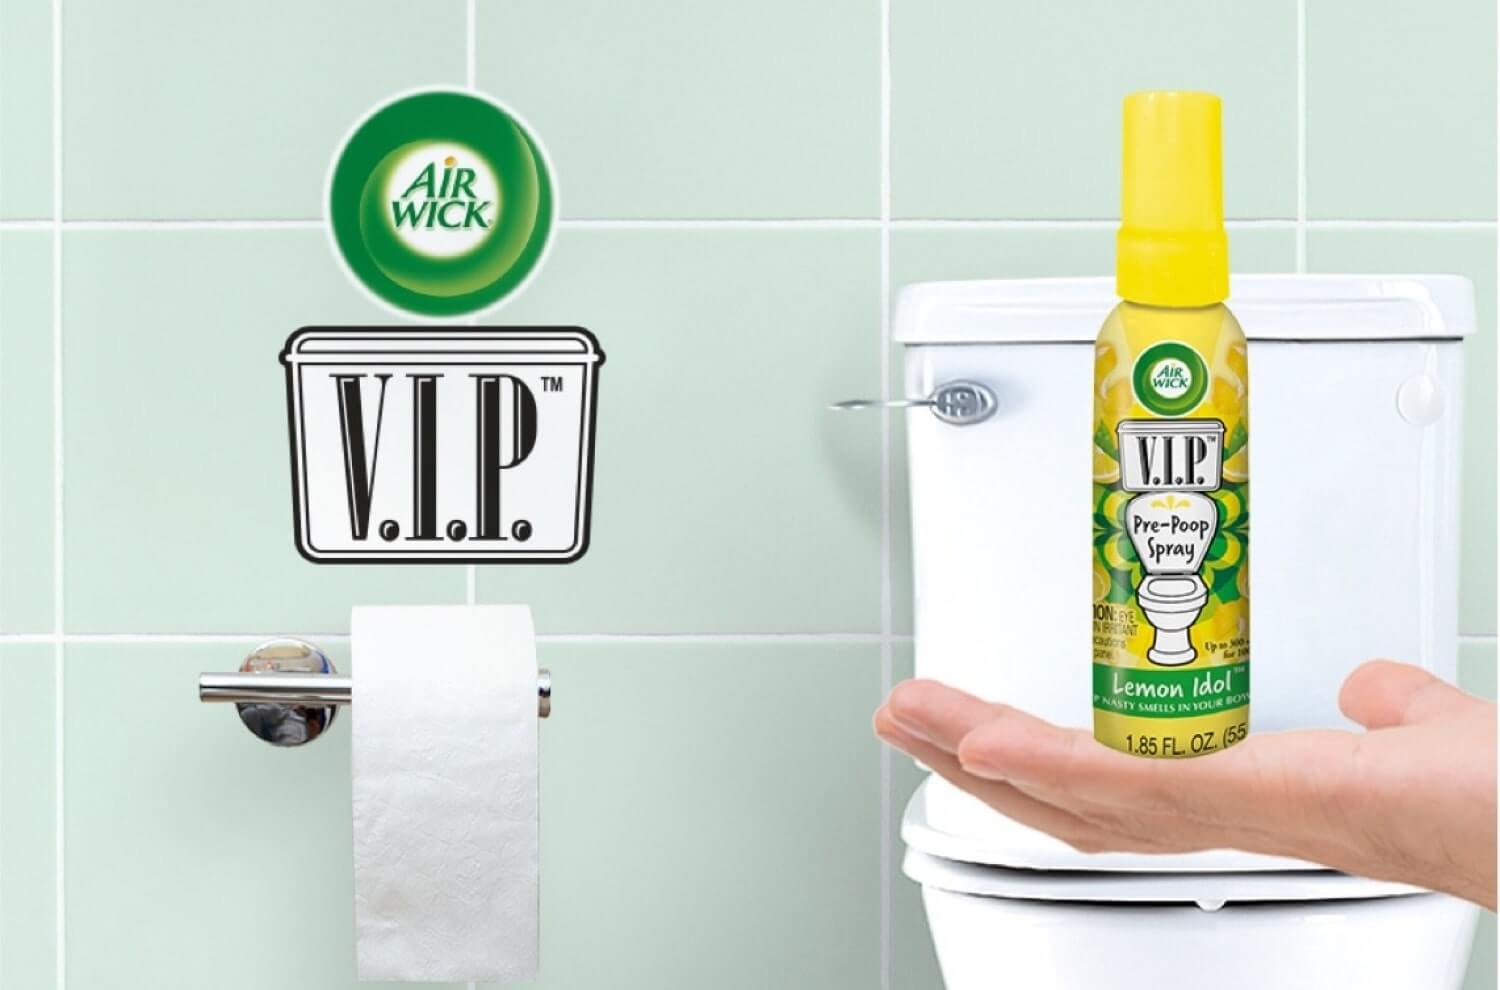 Air Wick V.I.P. Pre-Poop Toilet Spray, Fresh Model